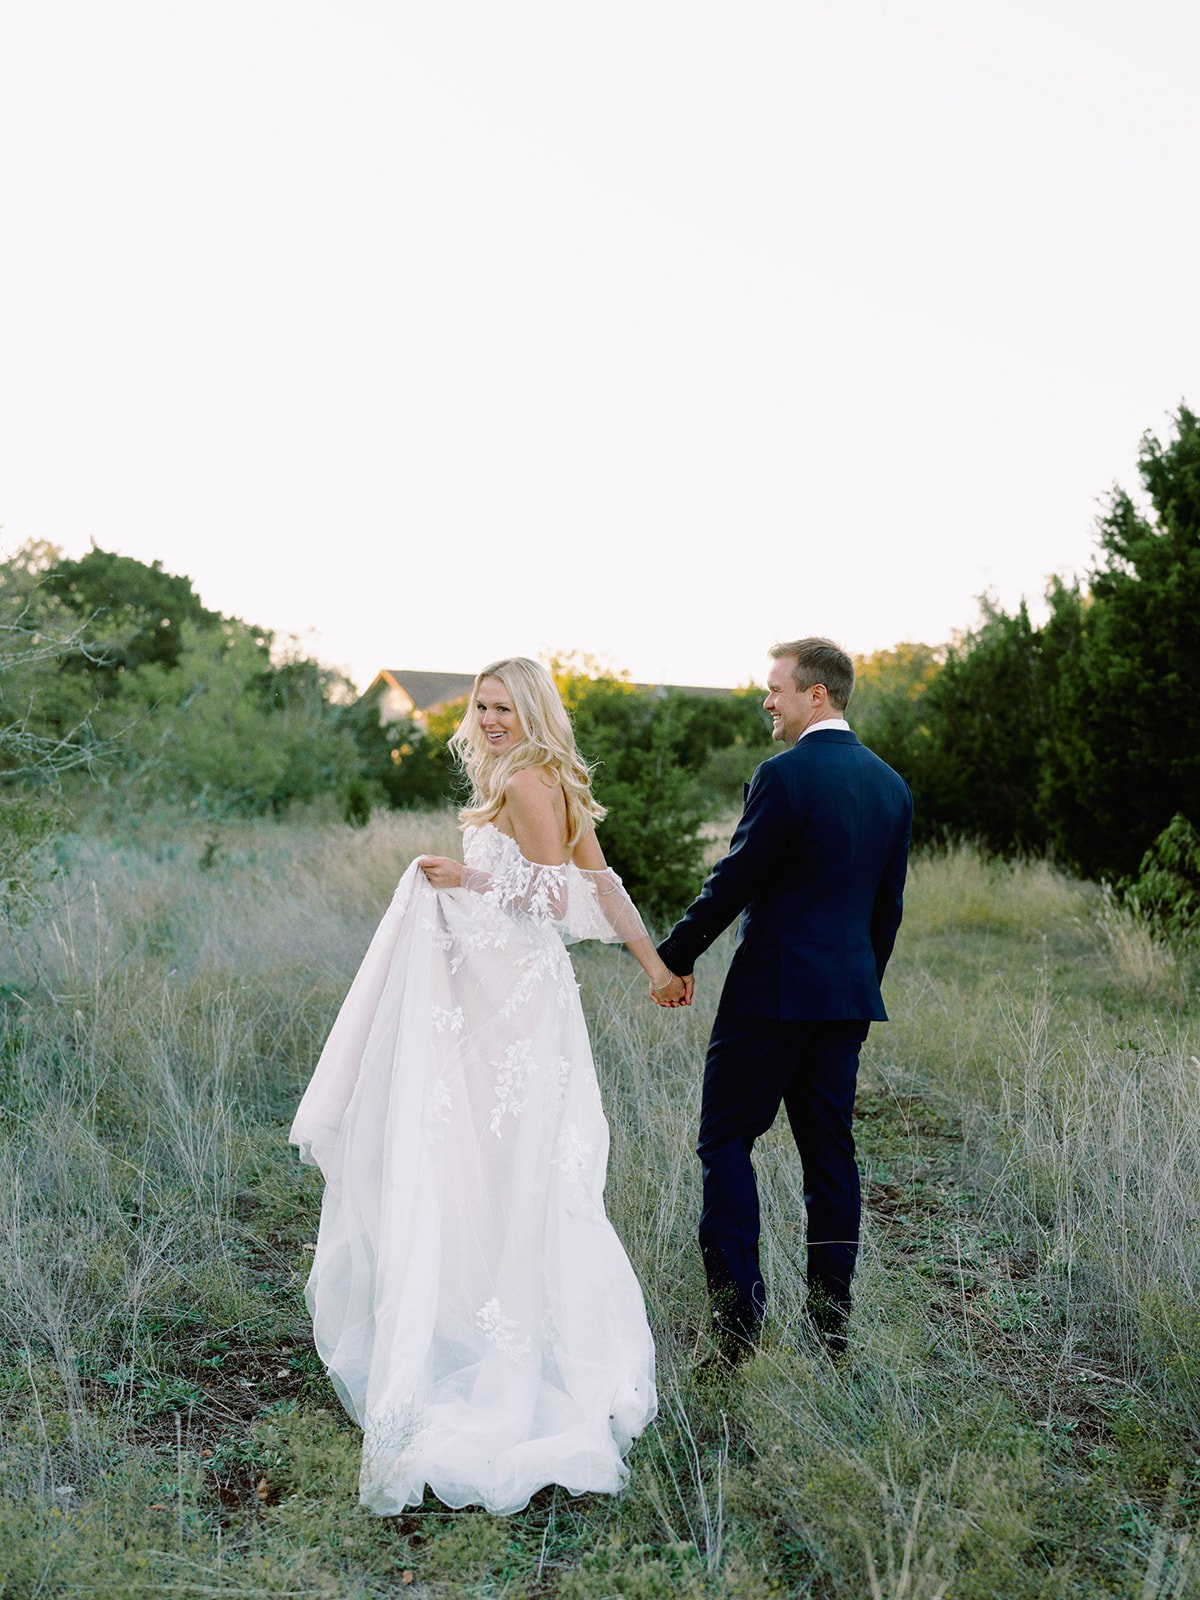 Best-Austin-Wedding-Photographers-Elopement-Film-35mm-Asheville-Santa-Barbara-Backyard-109.jpg